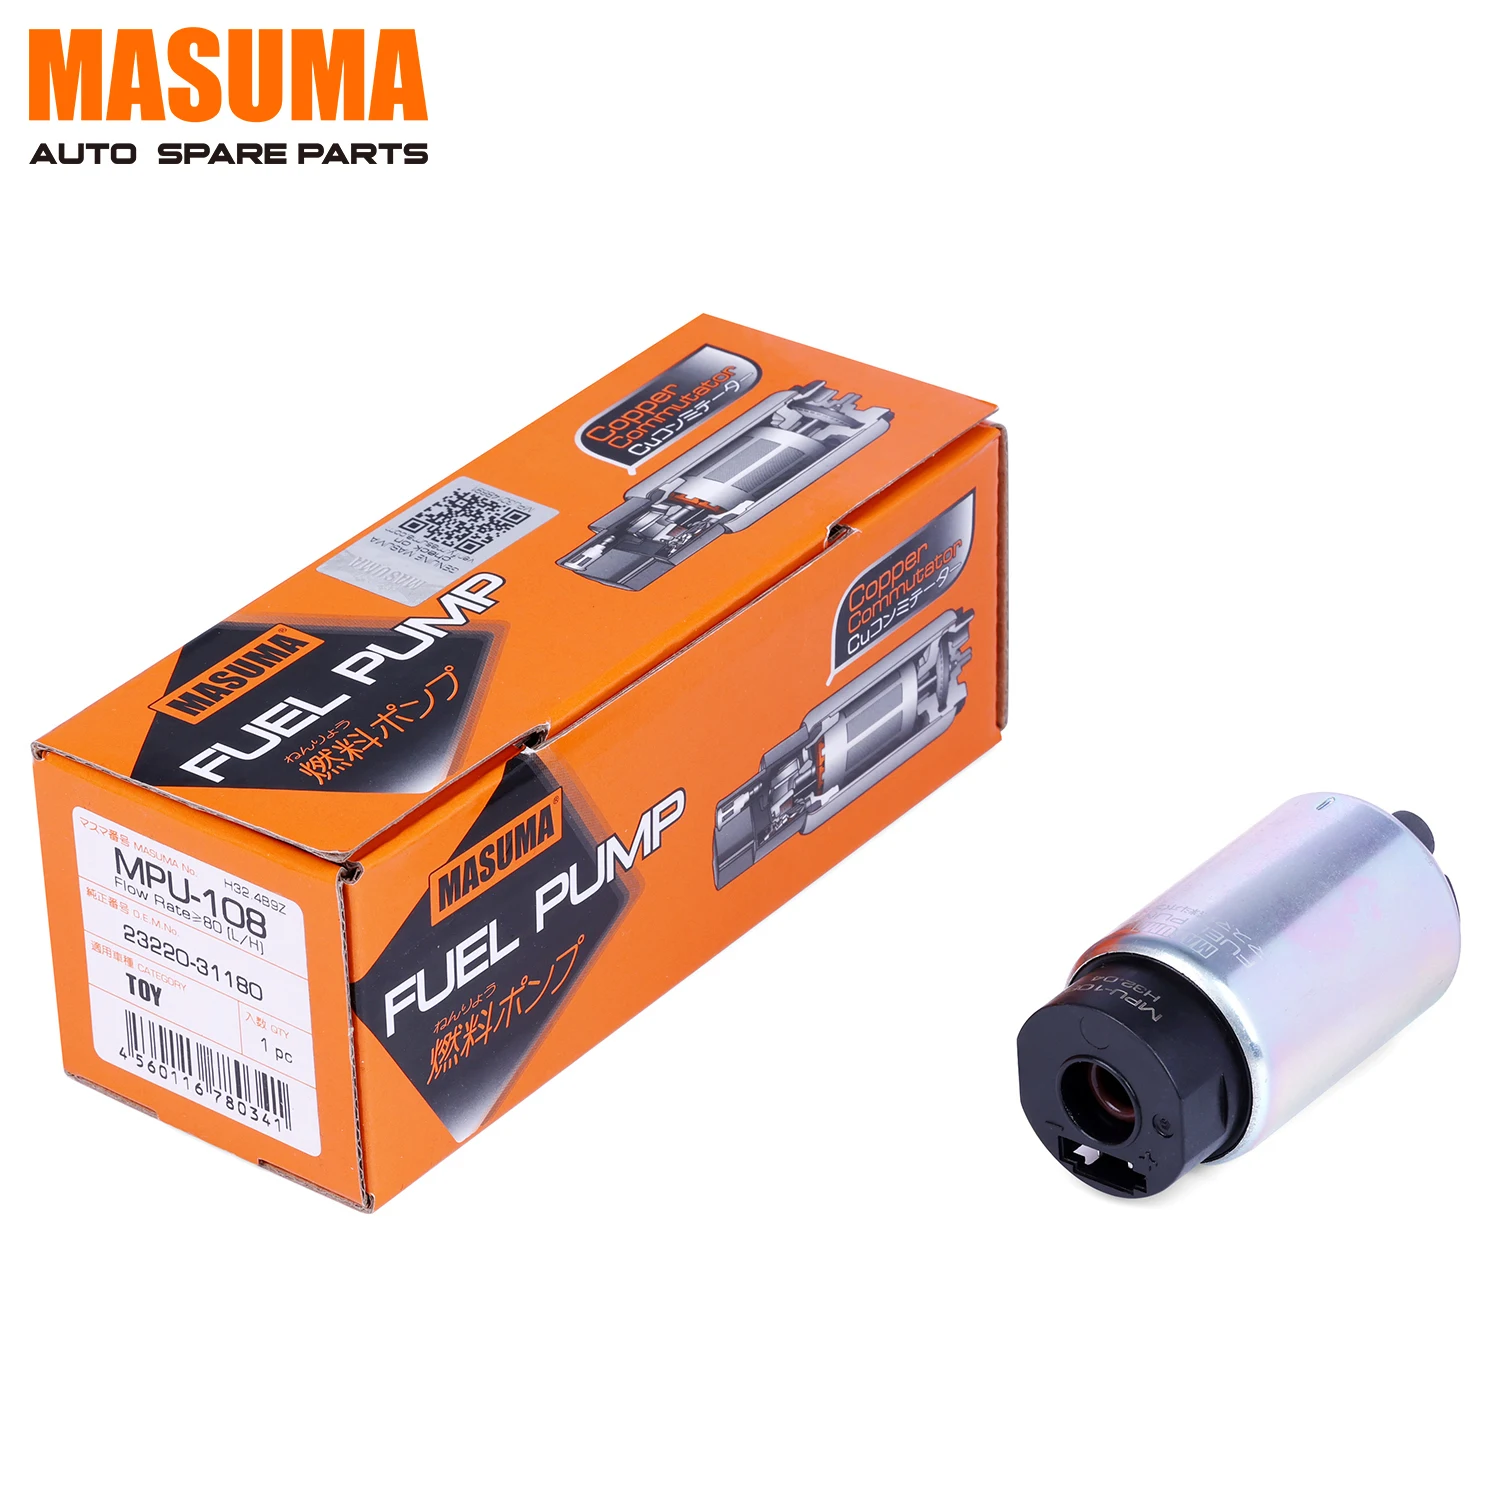 Mpu-108 Masuma Auto Spare Parts Fuel Pump 23220-21131 23220-21132  23220-0q030 23220-0q031 For Toyota Suzuki Escudo - Buy Fuel Pump,Auto Spare  Parts Fuel Pump,Masuma Fuel Pump Product on Alibaba.com